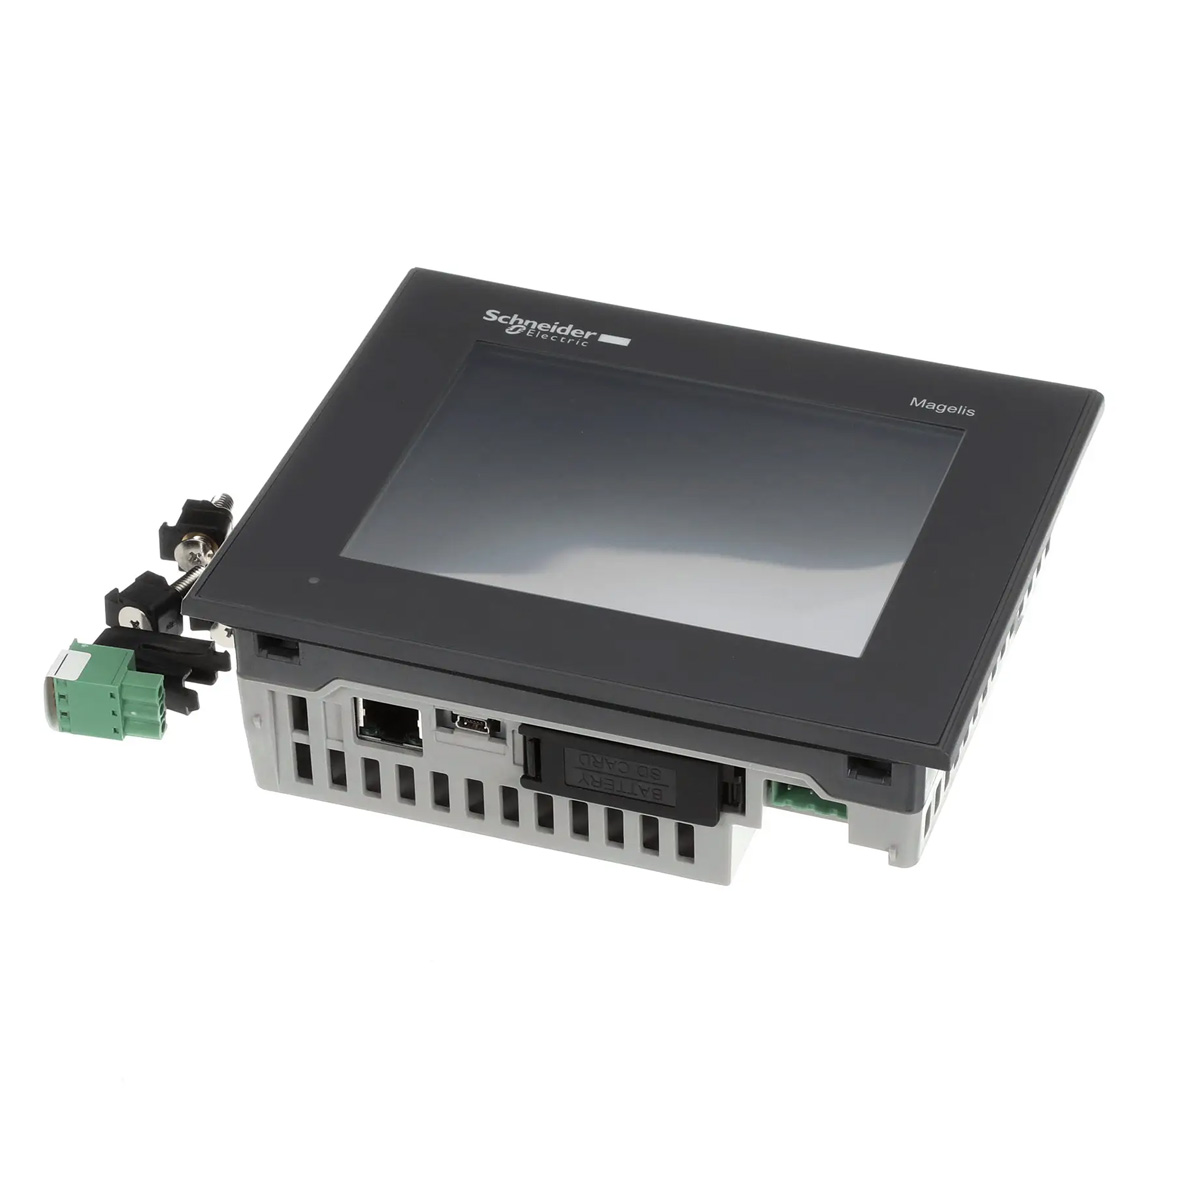 Schneider HMIGTO2310 320x240 Piksel Qvga 96 Mb 5.7 inç TFT Dokunmatik Operatör Paneli